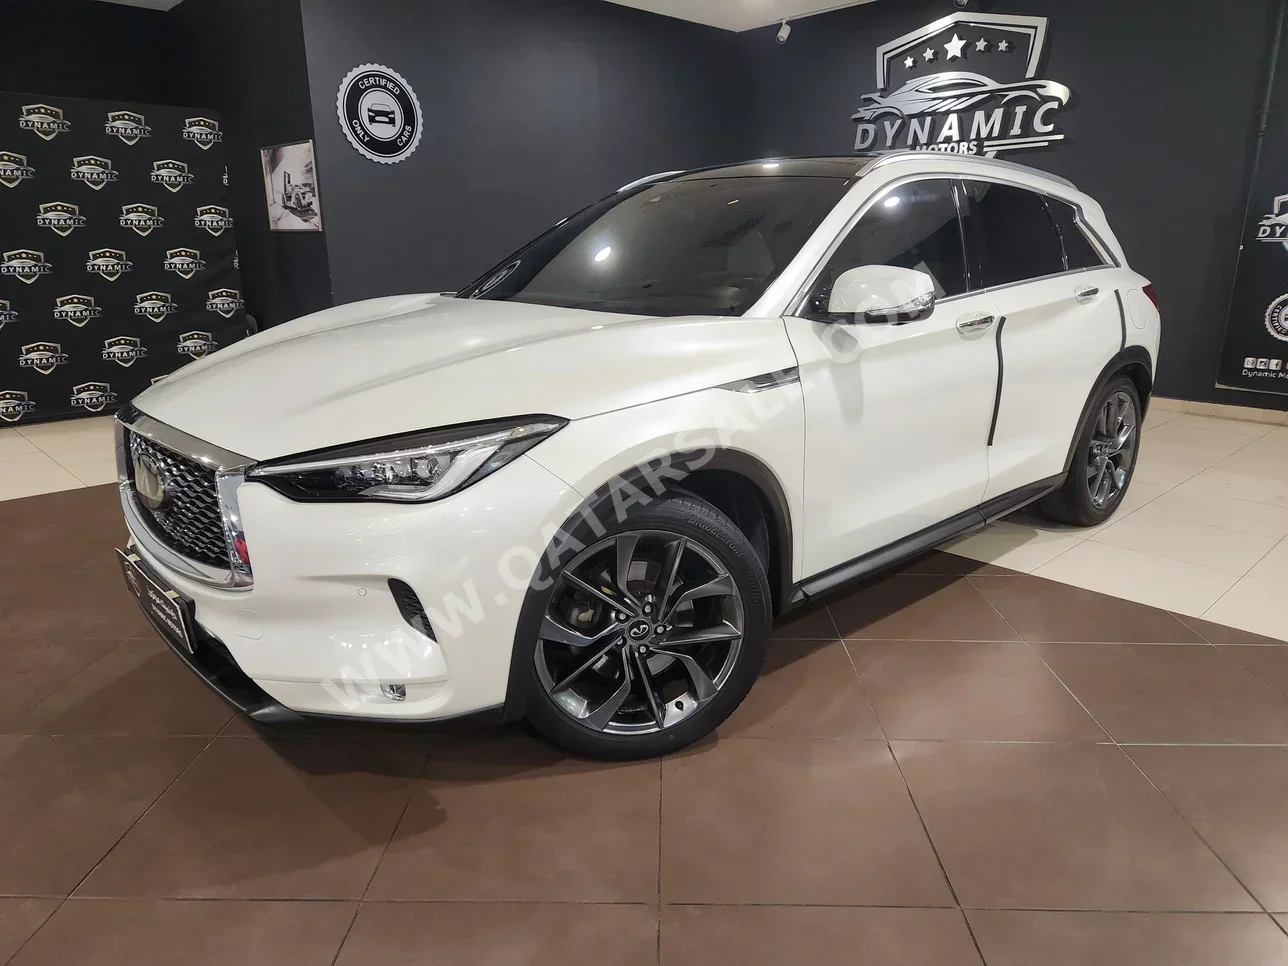 Infiniti  QX  50  2019  Automatic  22,000 Km  4 Cylinder  All Wheel Drive (AWD)  SUV  White  With Warranty